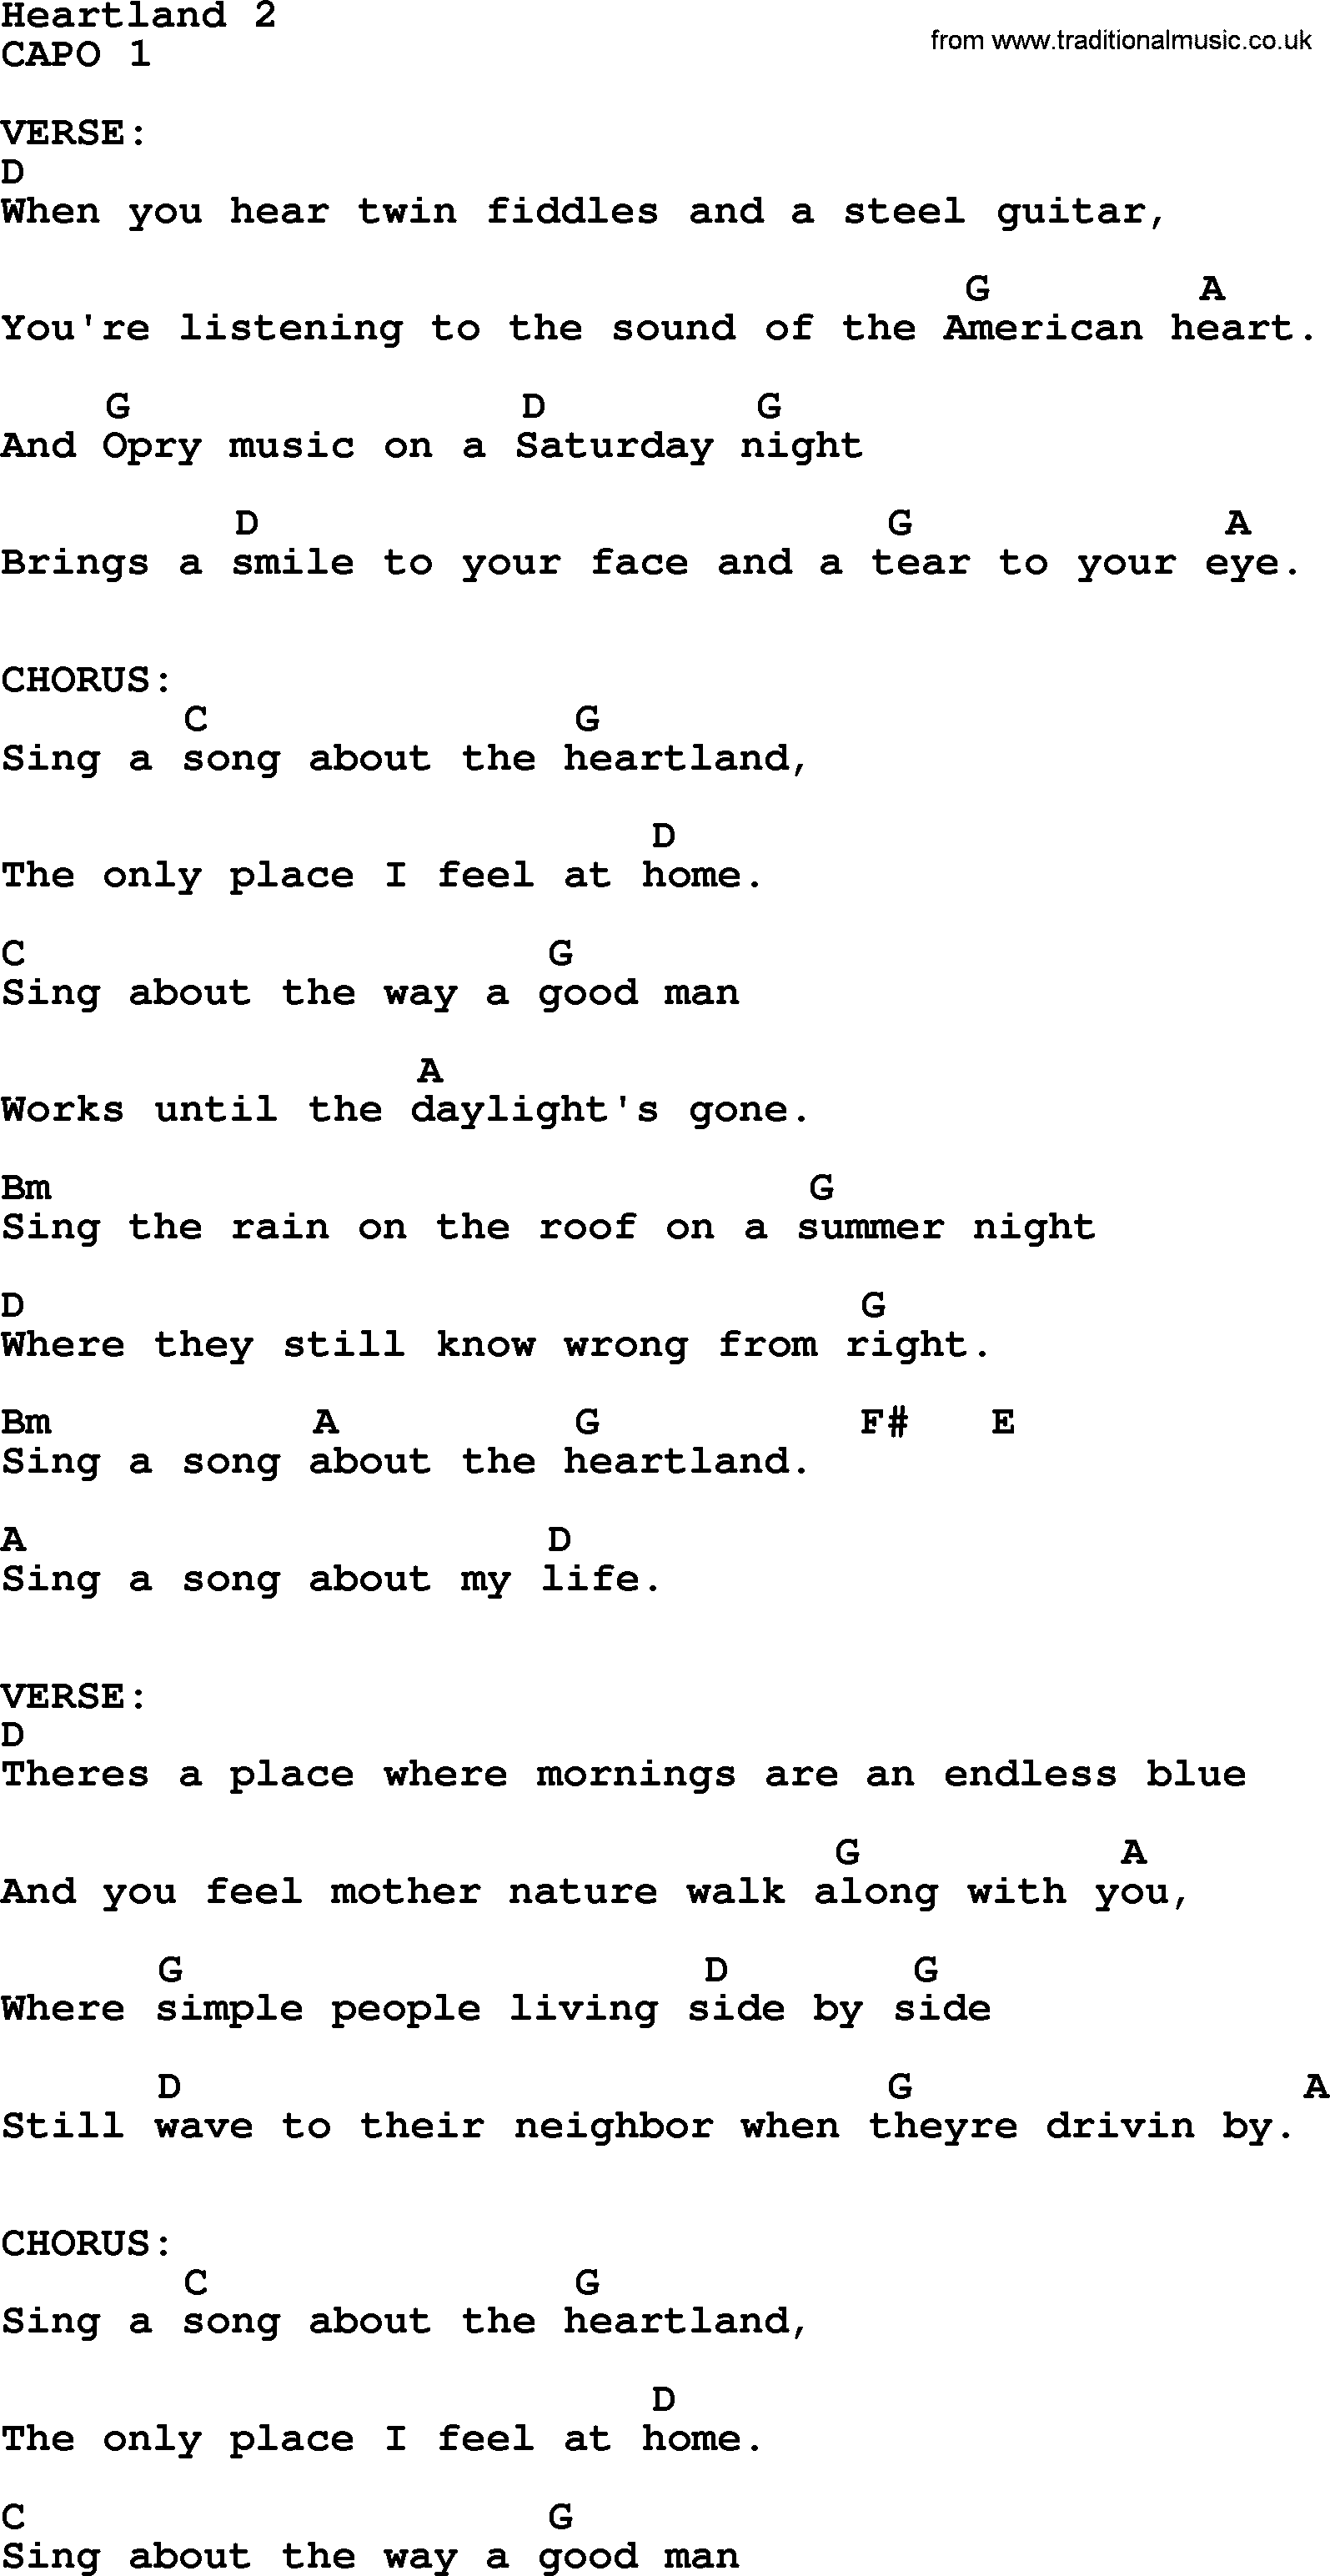 George Strait song: Heartland 2, lyrics and chords